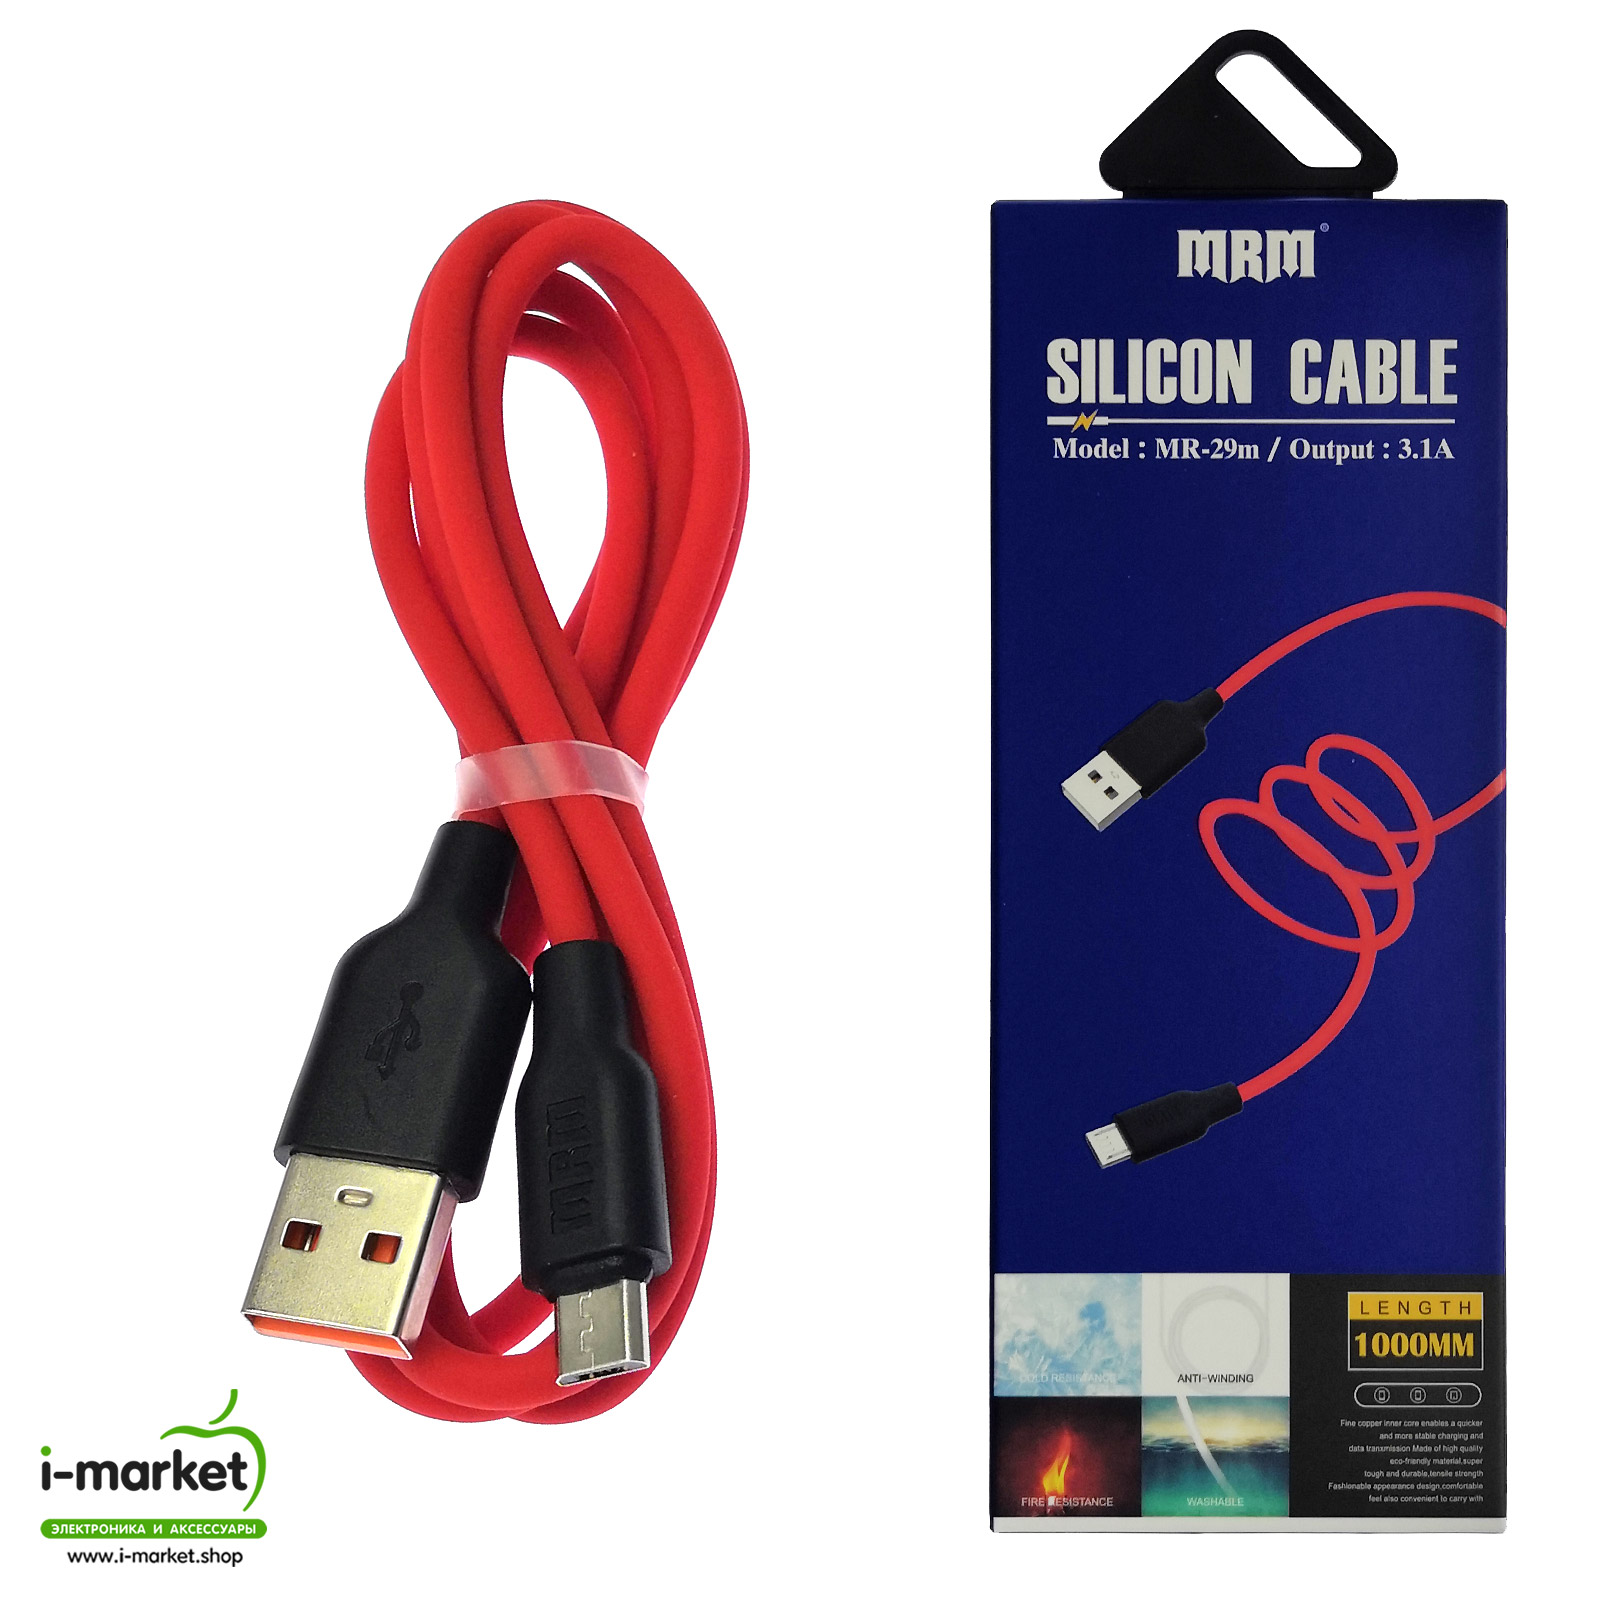 MRM MR-29m кабель Micro USB, 3.1A, длина 1 метр, силикон, цвет красный.